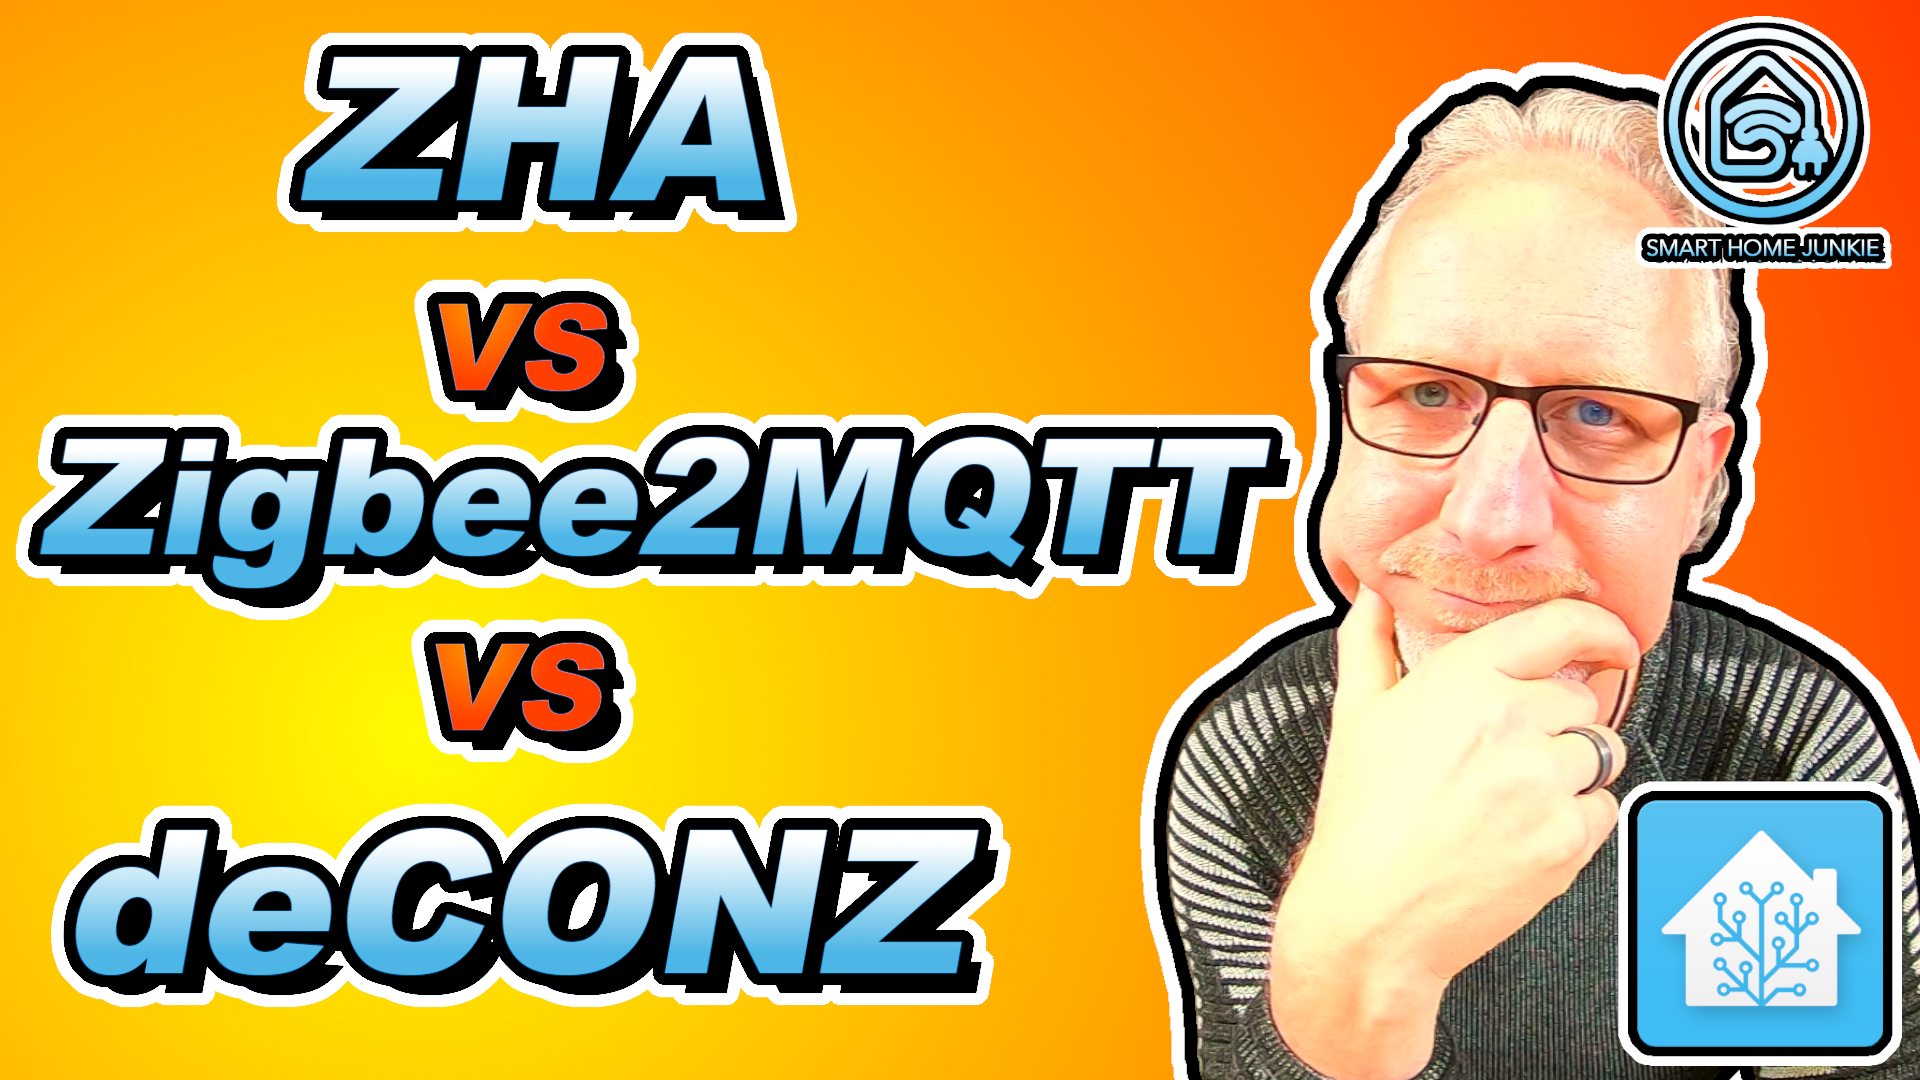 Zigbee2MQTT vs ZHA vs deCONZ – WATCH THIS BEFORE YOU DECIDE!